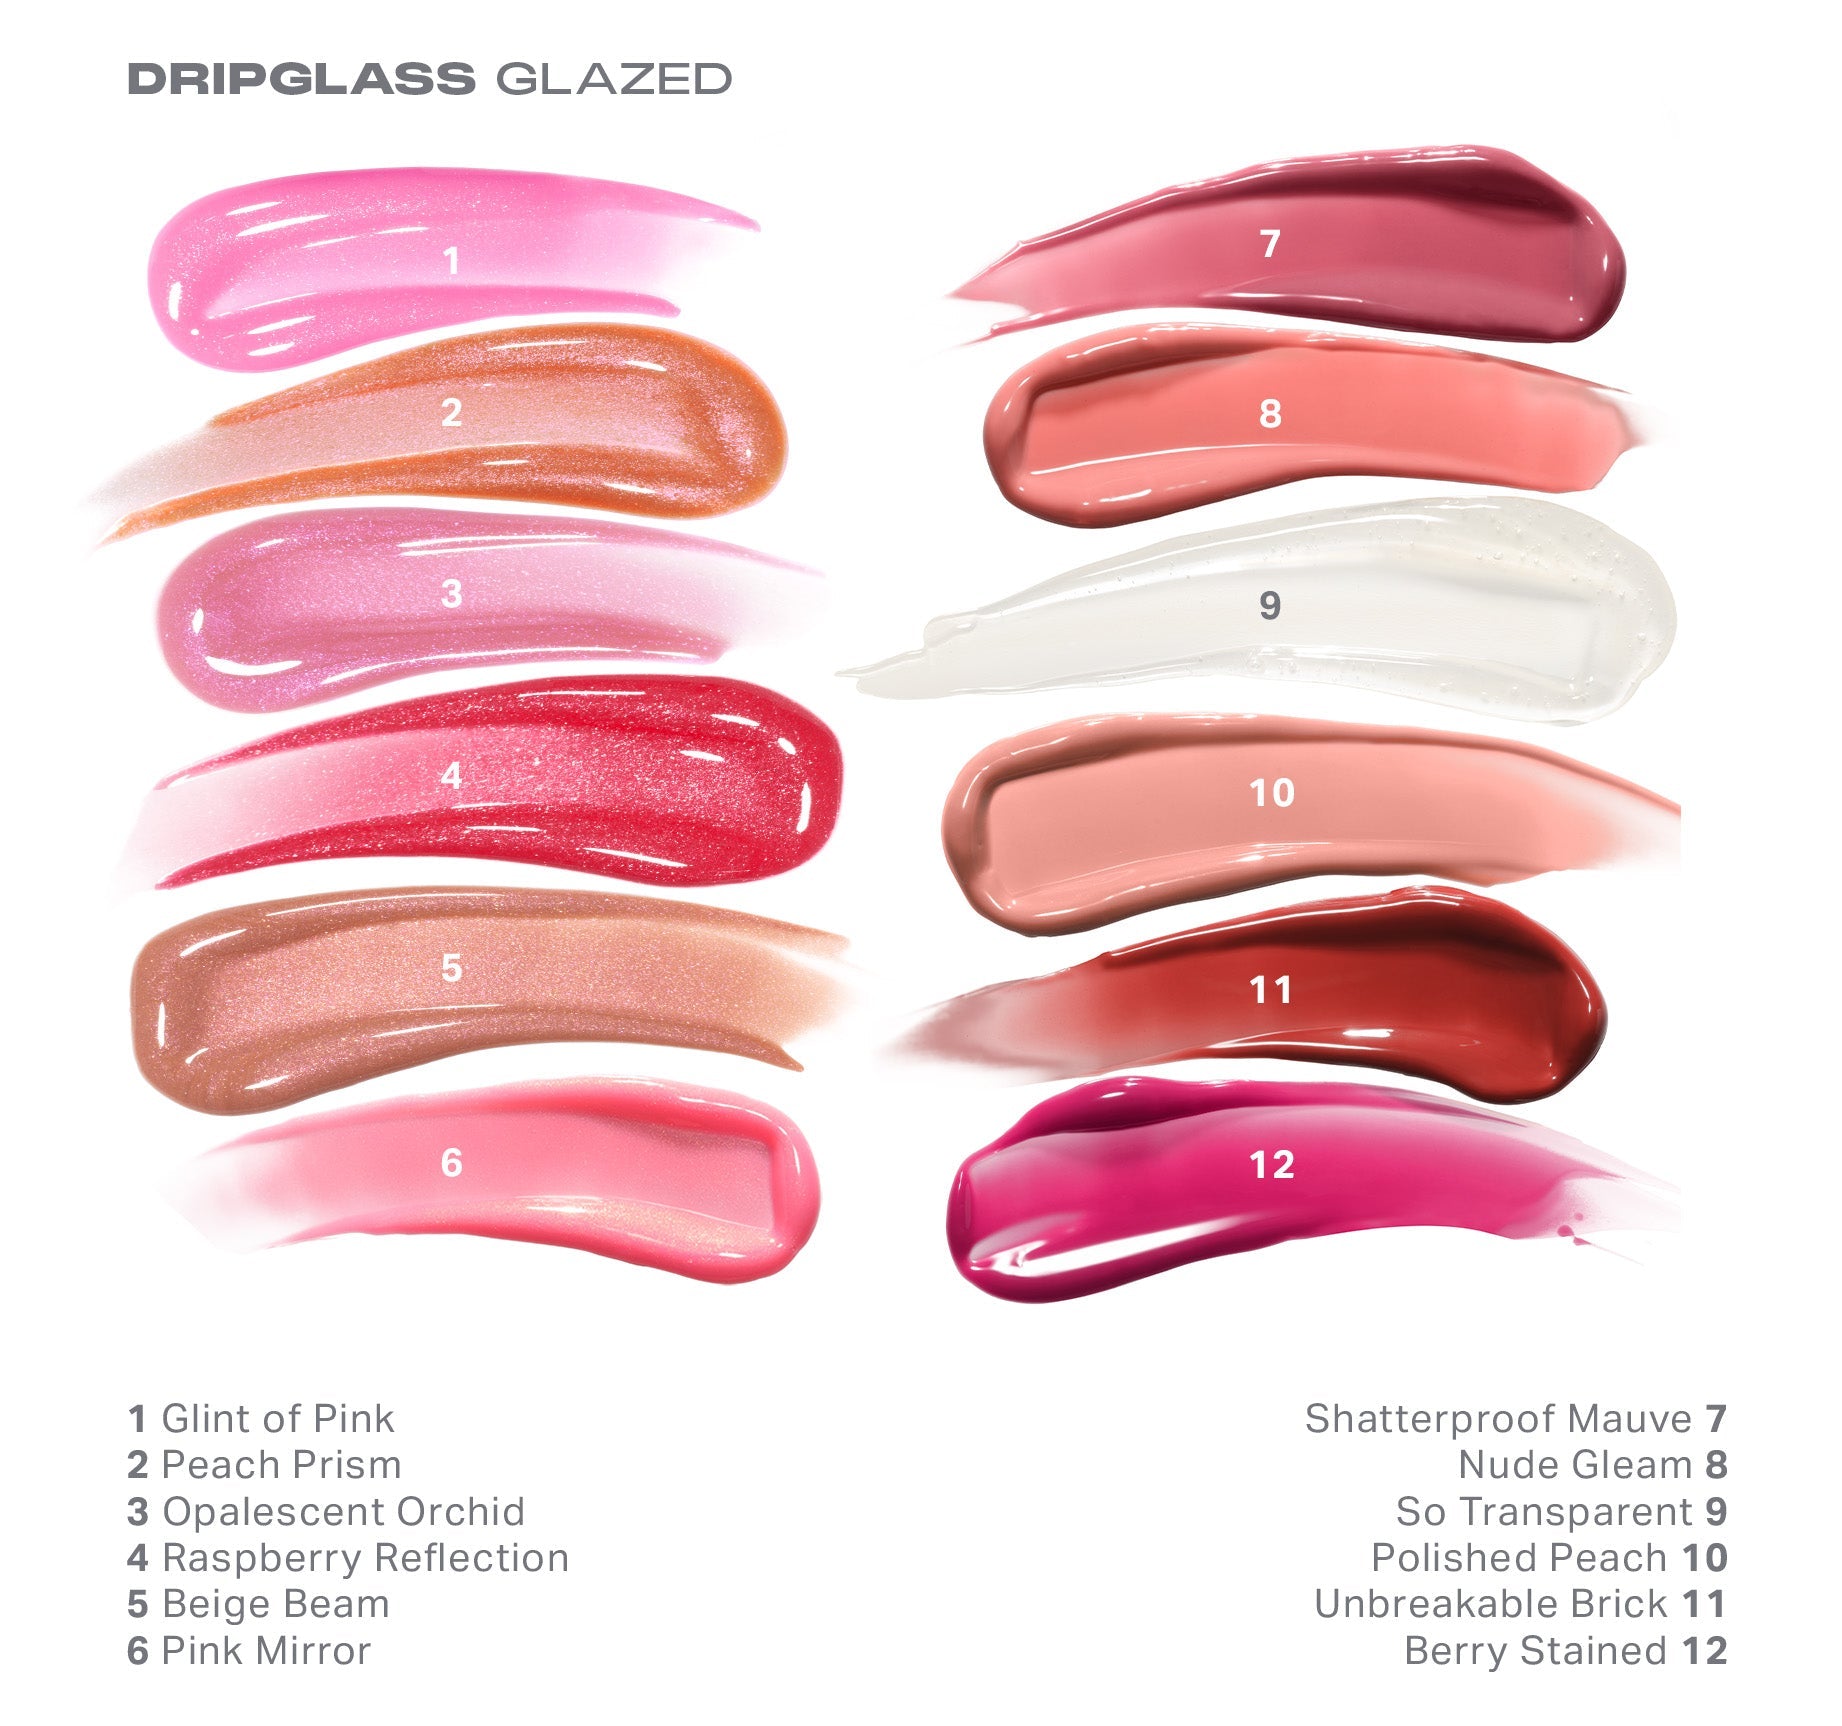 Dripglass Glazed High Shine Lip Gloss - Beige Beam - Image 4